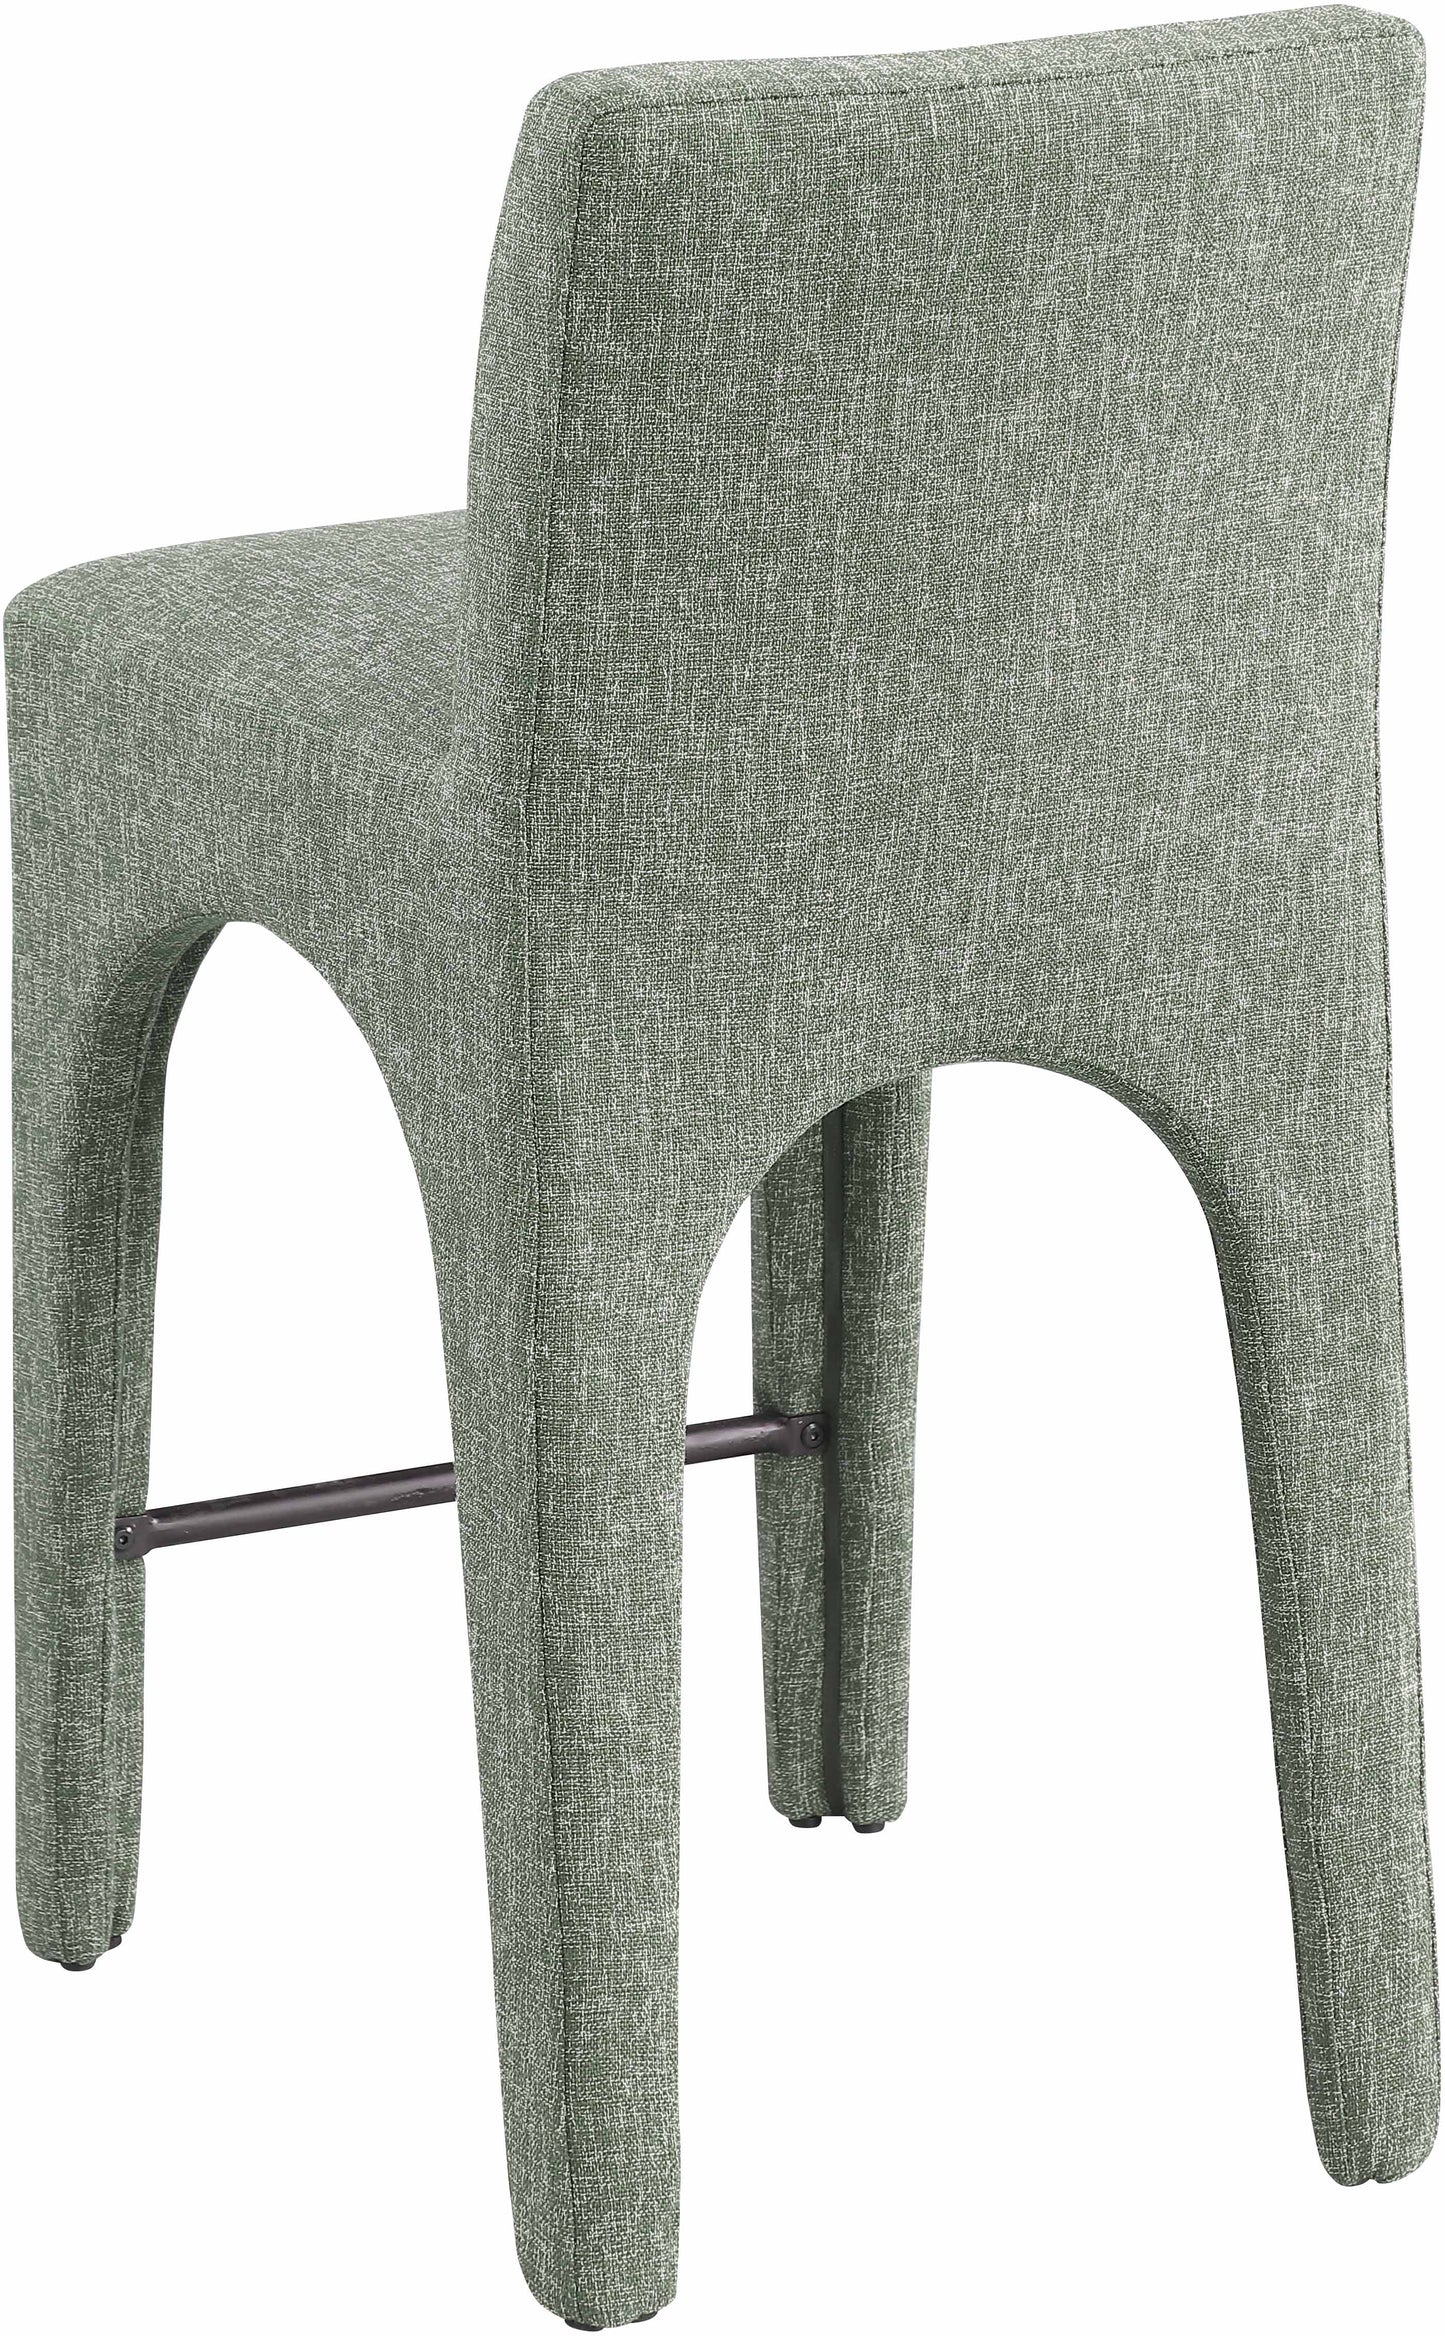 galaxy green linen textured fabric stool c